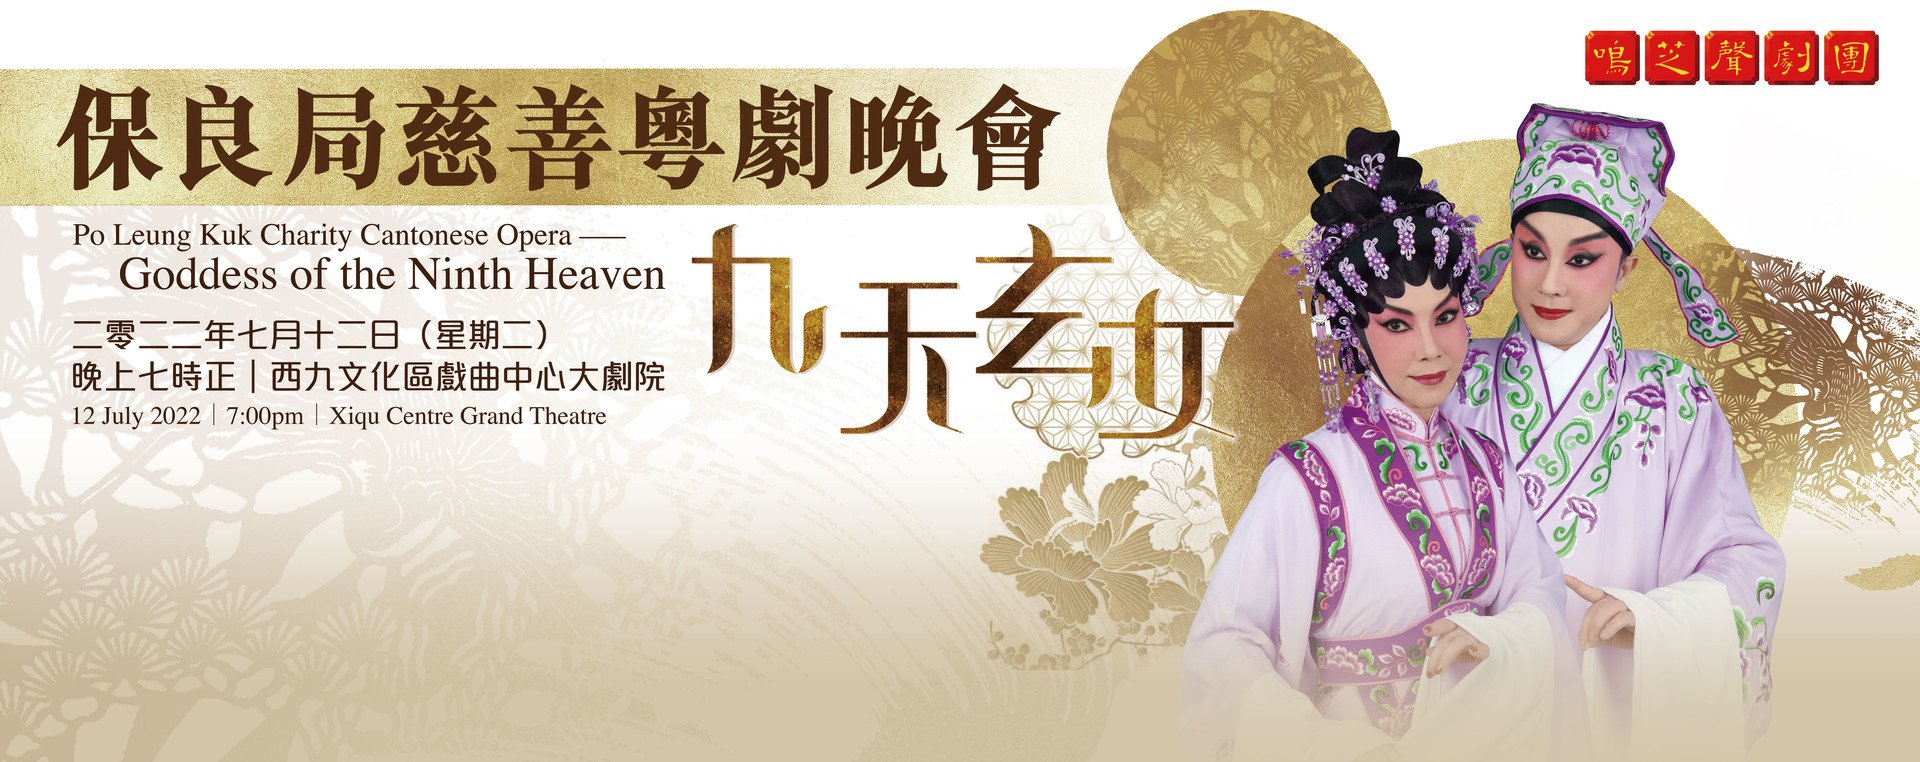 Po Leung Kuk Charity Cantonese Opera 2022